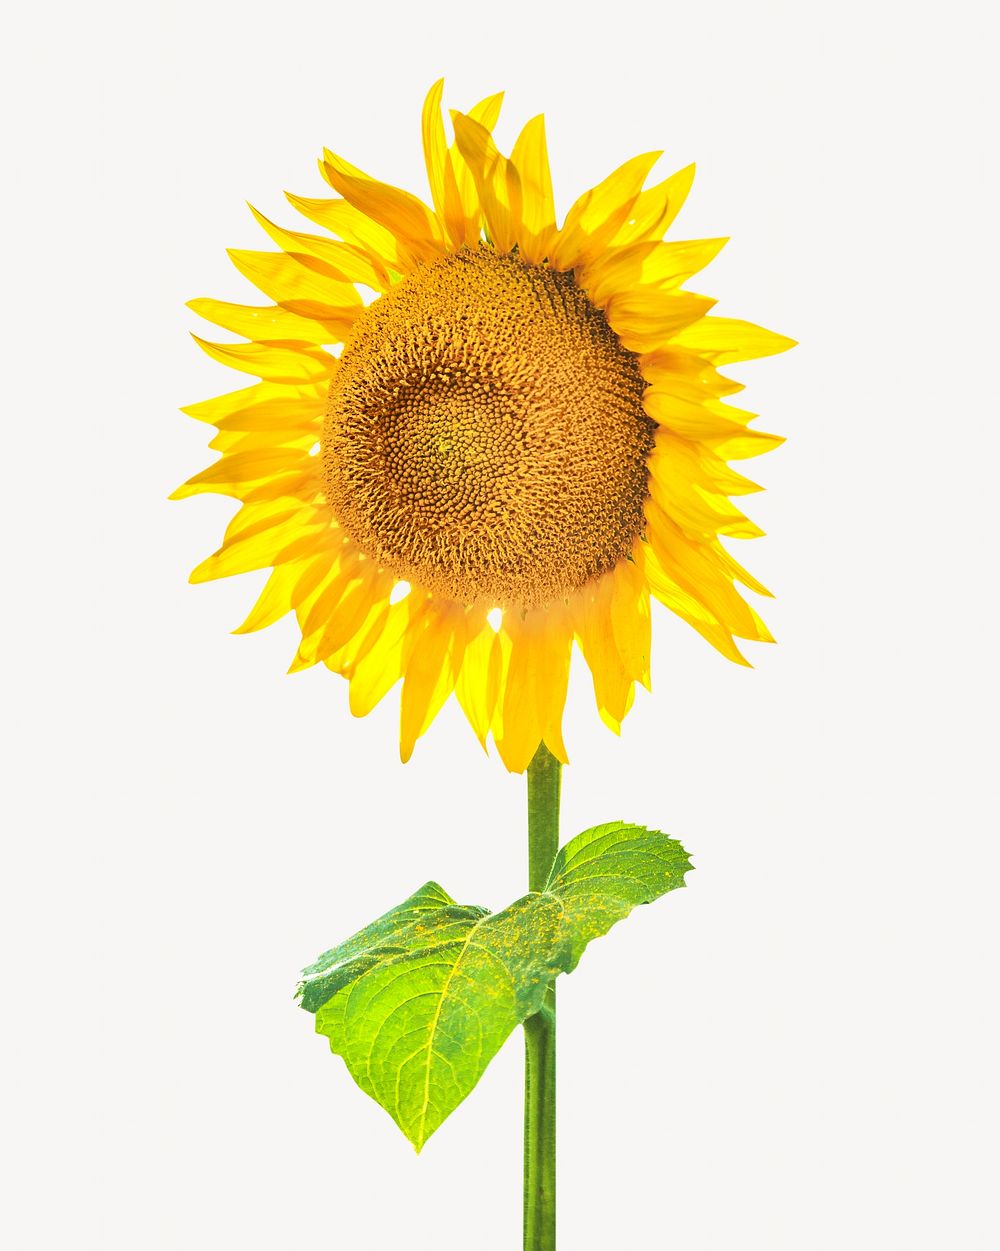 Sunflower image, yellow flower on pastel background